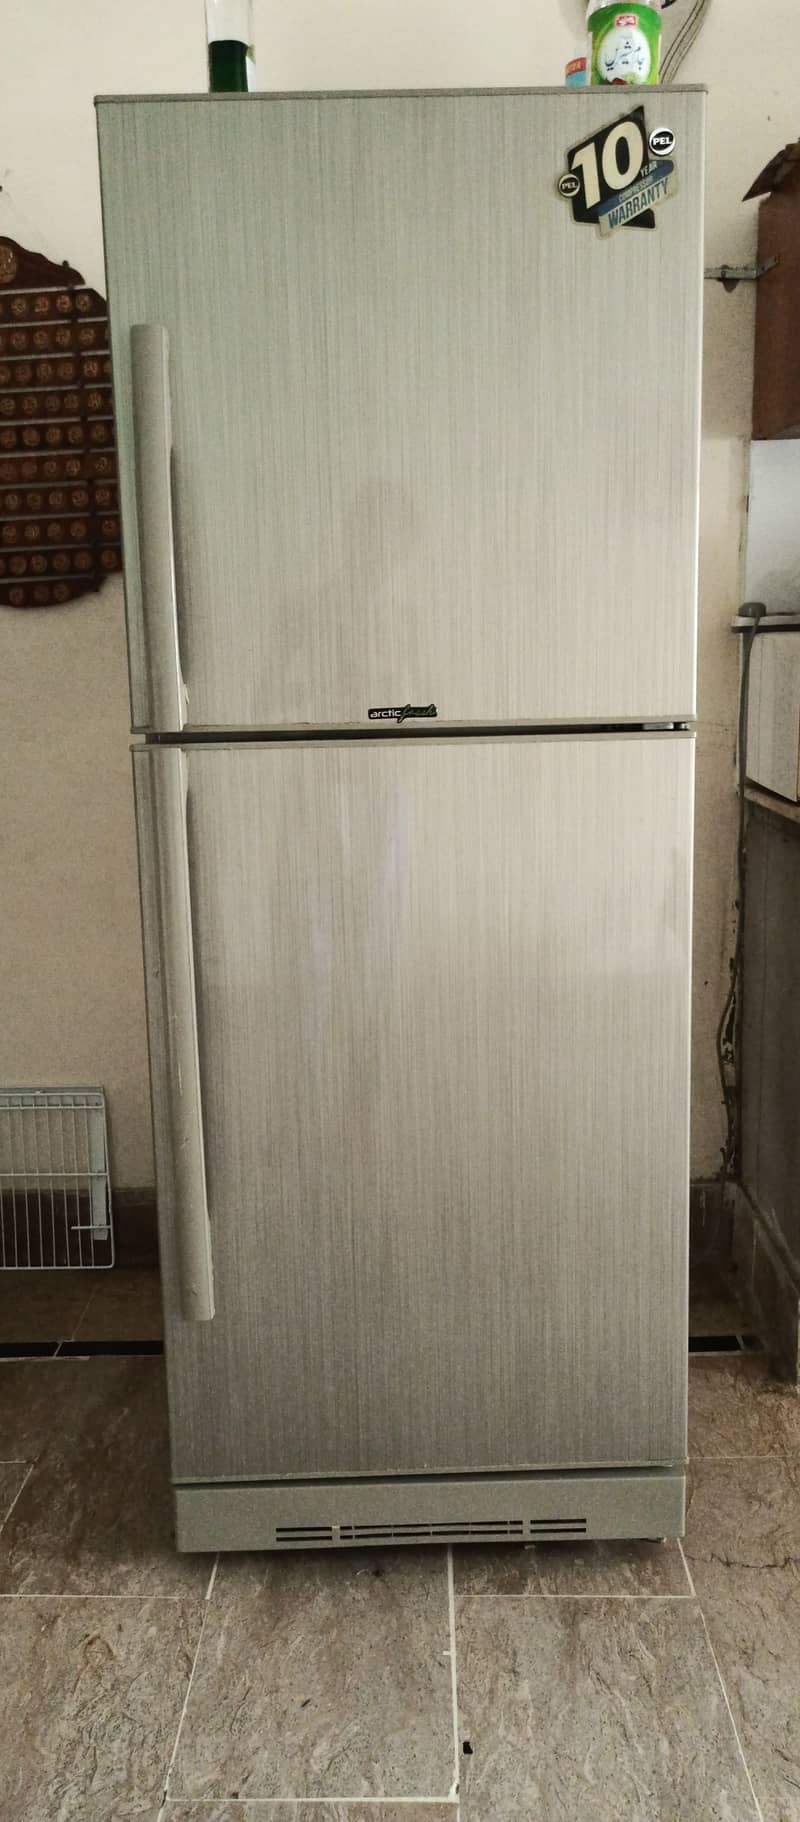 Pel jumbo (Full) size Refrigerator In good condition like neW 0